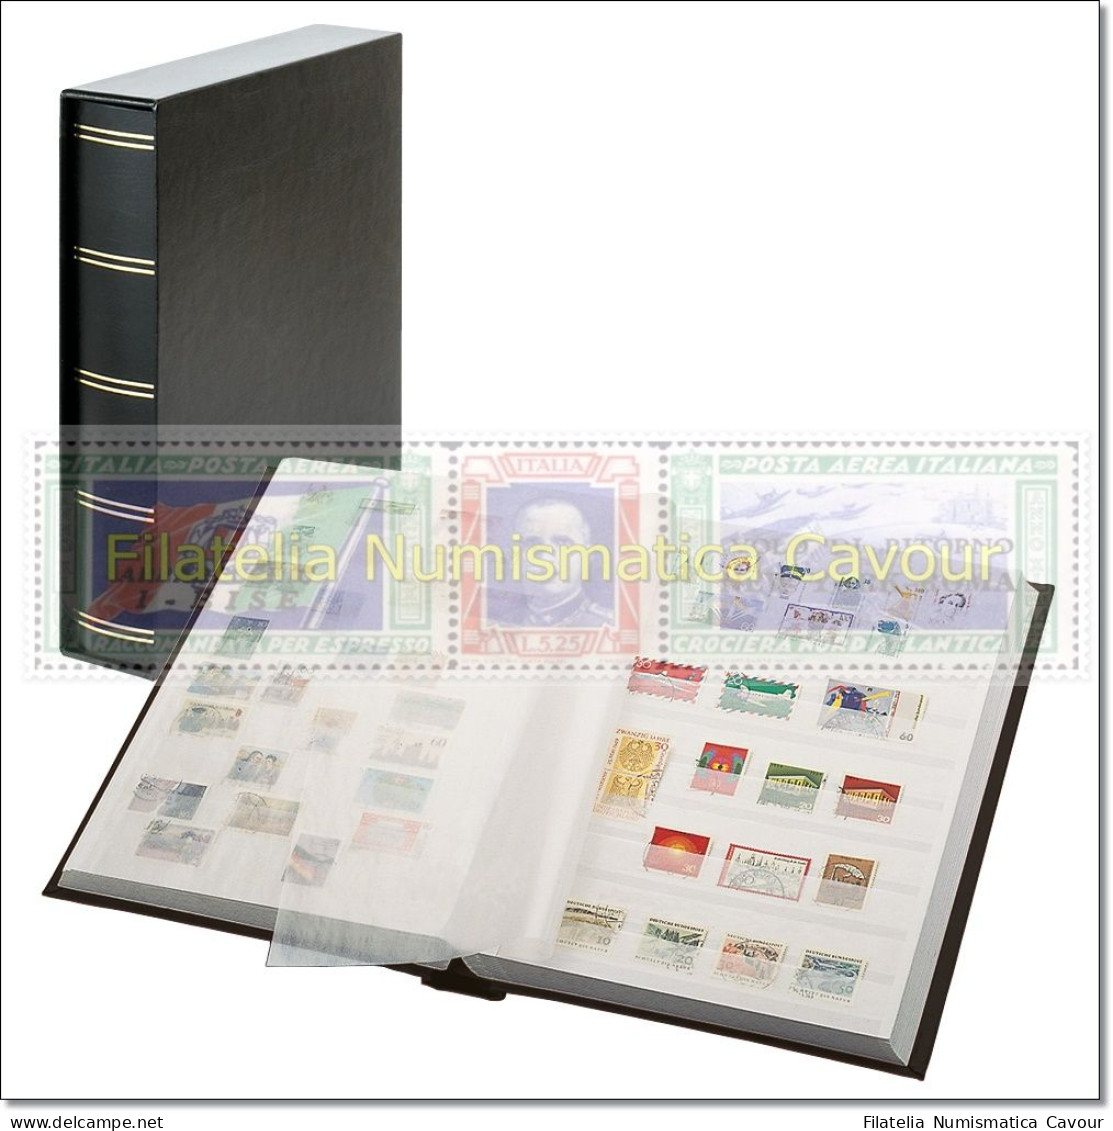 CLASSIFICATORE 30 Pagine FONDO BIANCO COPERTINA IMBOTTITA SIMILPELLE + CUSTODIA - NERO - Large Format, White Pages